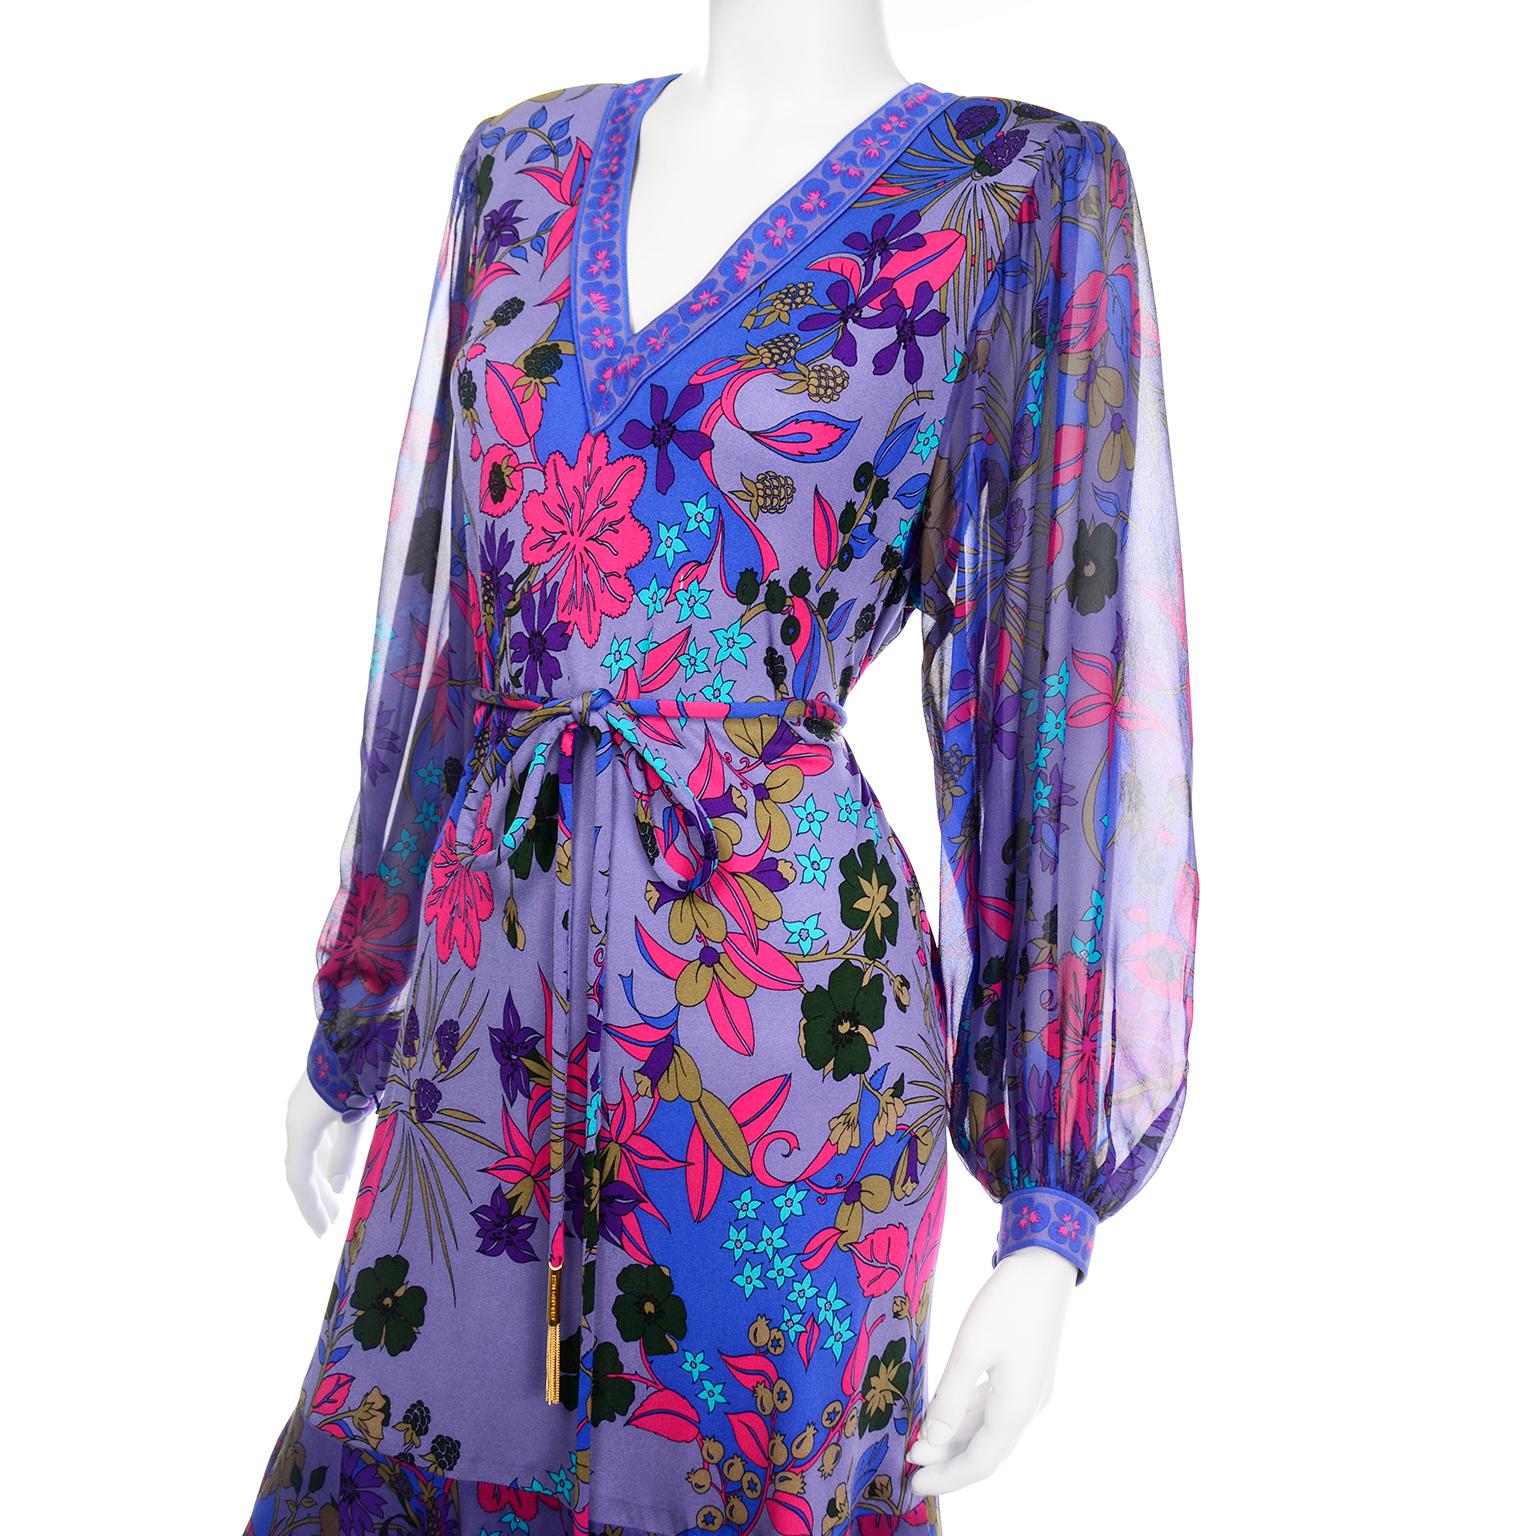 Averardo Bessi Italy Vintage Purple Floral Silk Jersey Dress With Belt 2